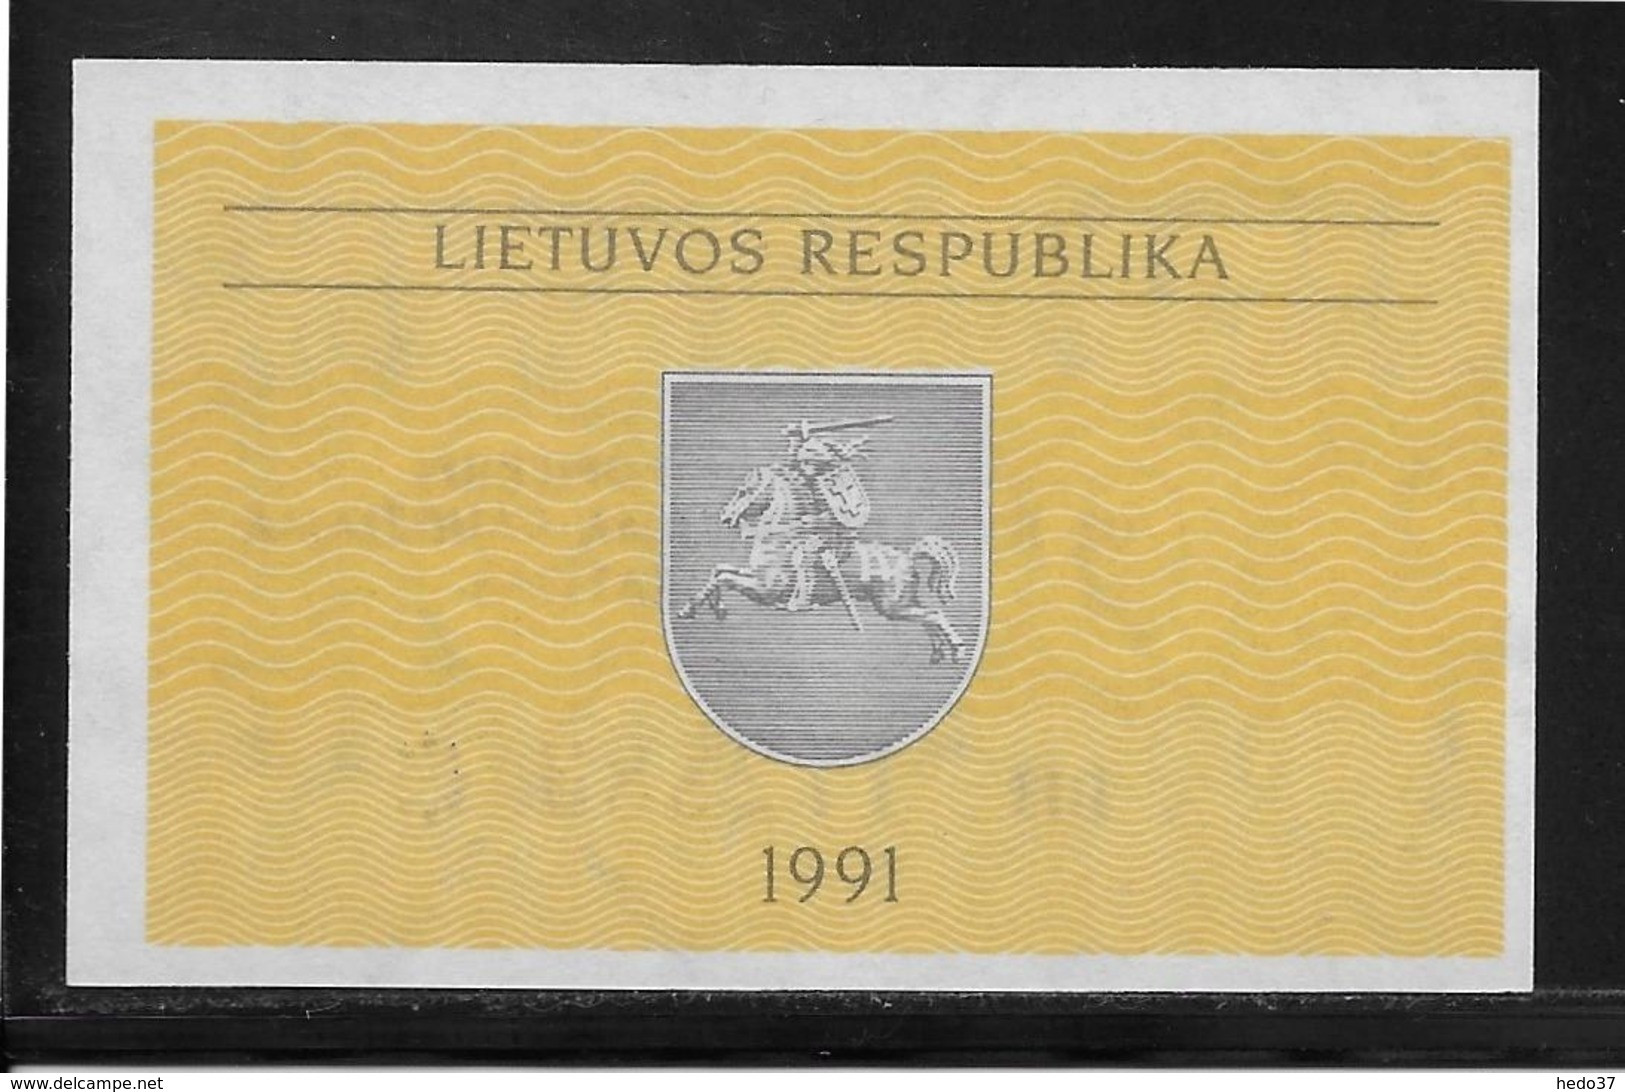 Lituanie - 0,50 Talonas -  Pick N°31b  - NEUF - Lituanie